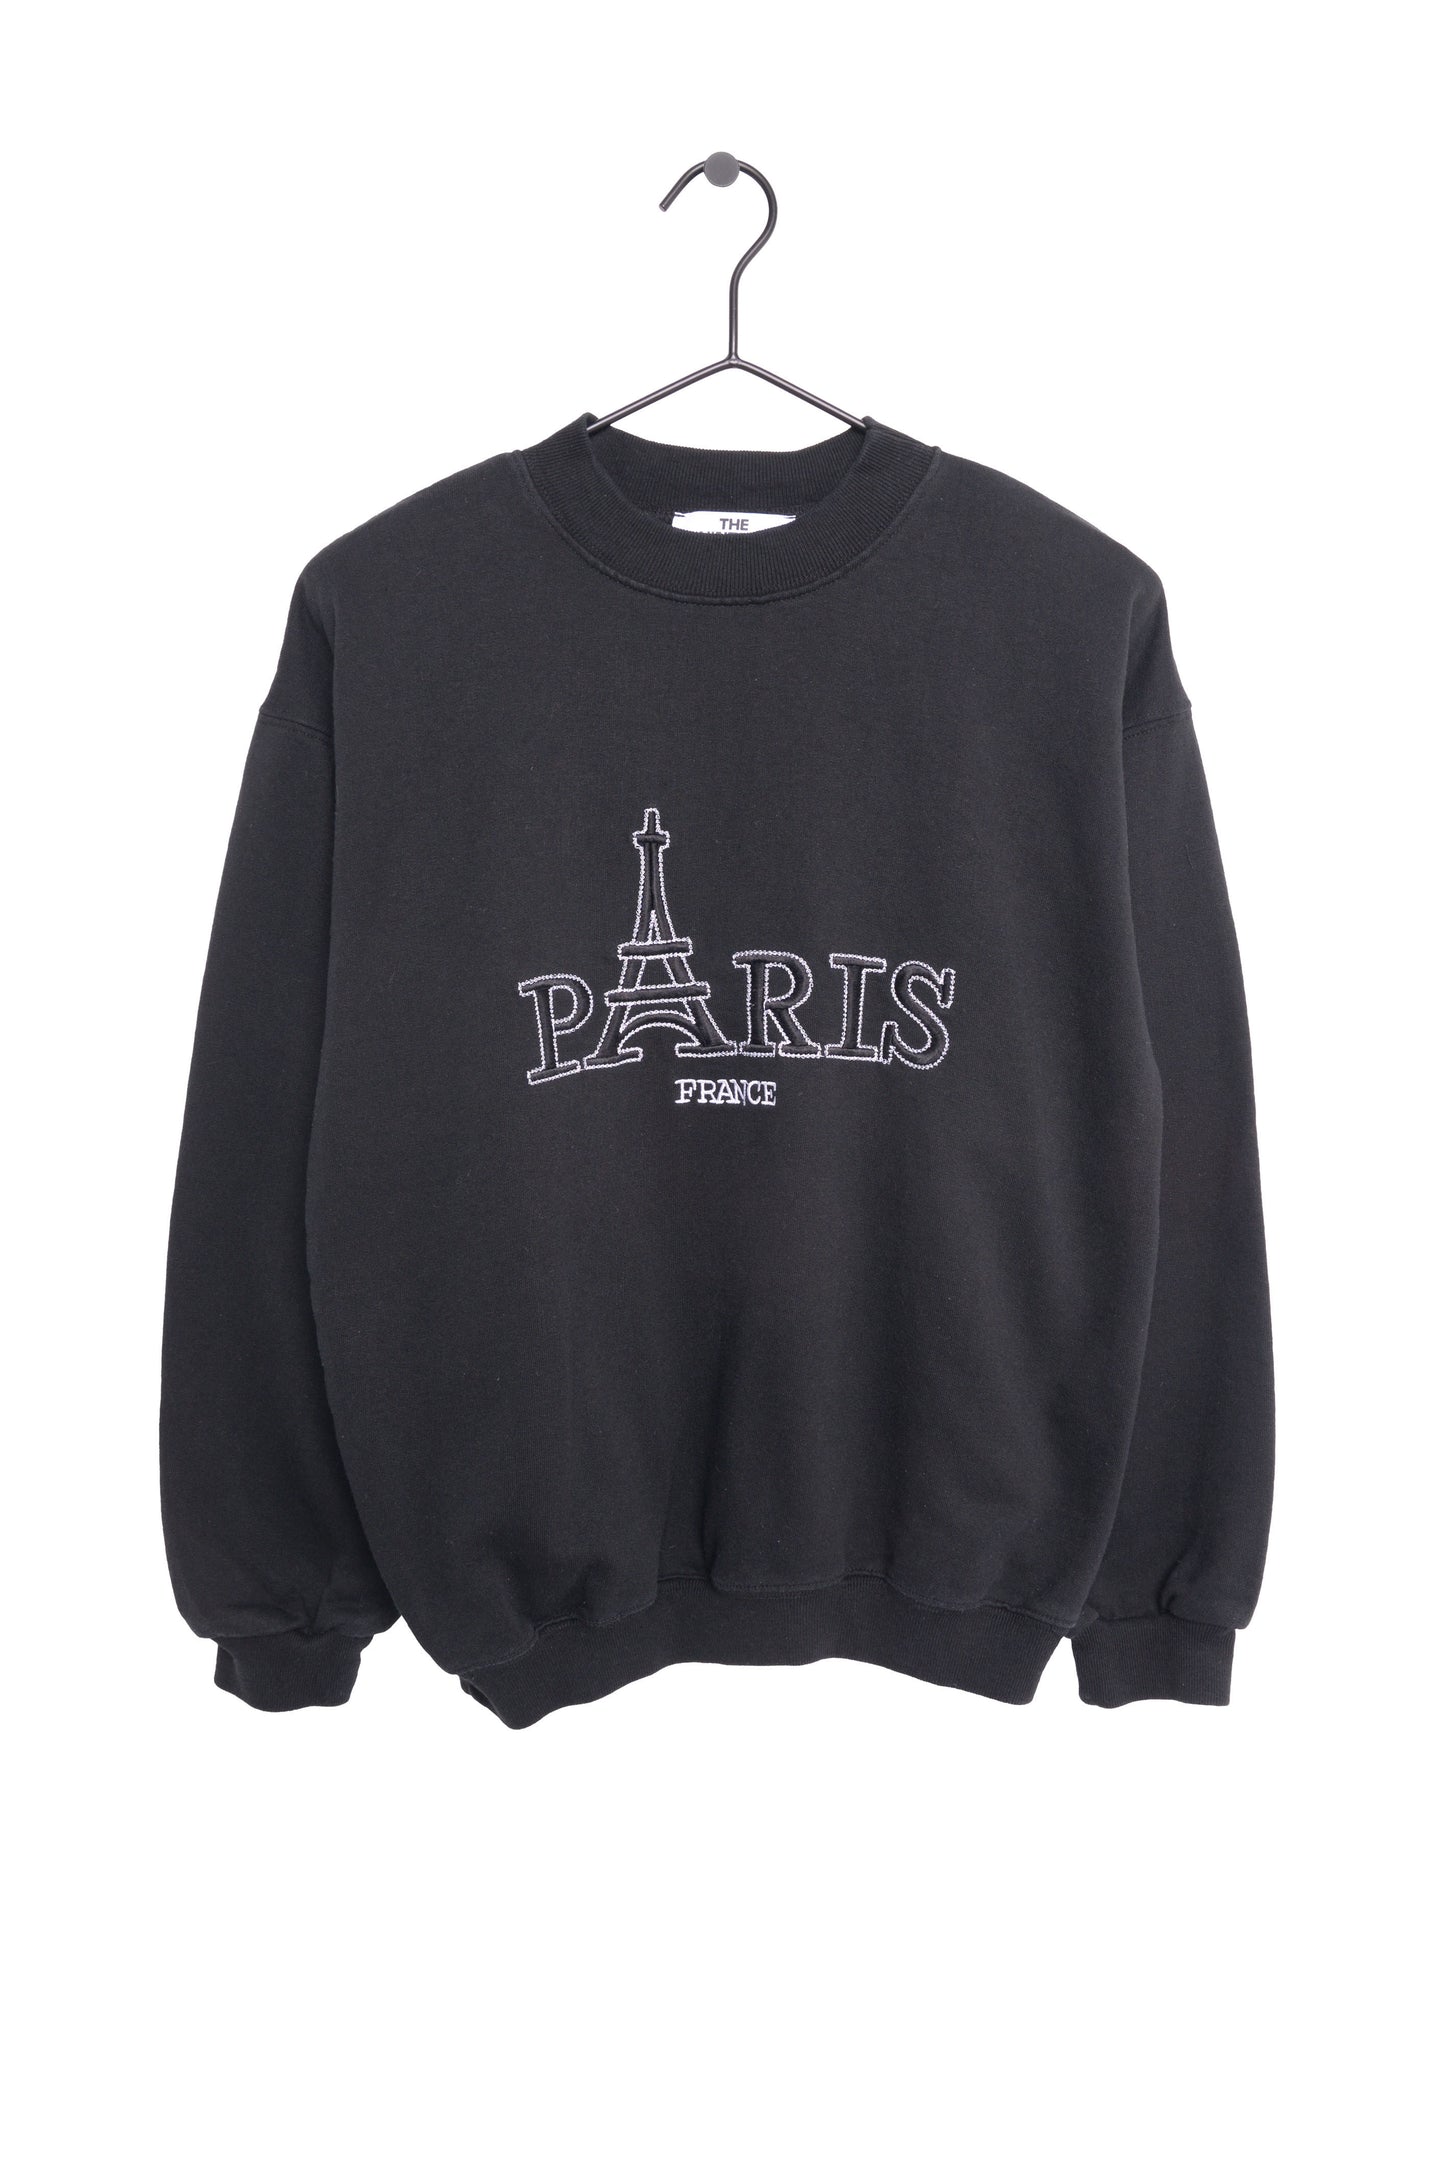 1990s Paris France Sweatshirt